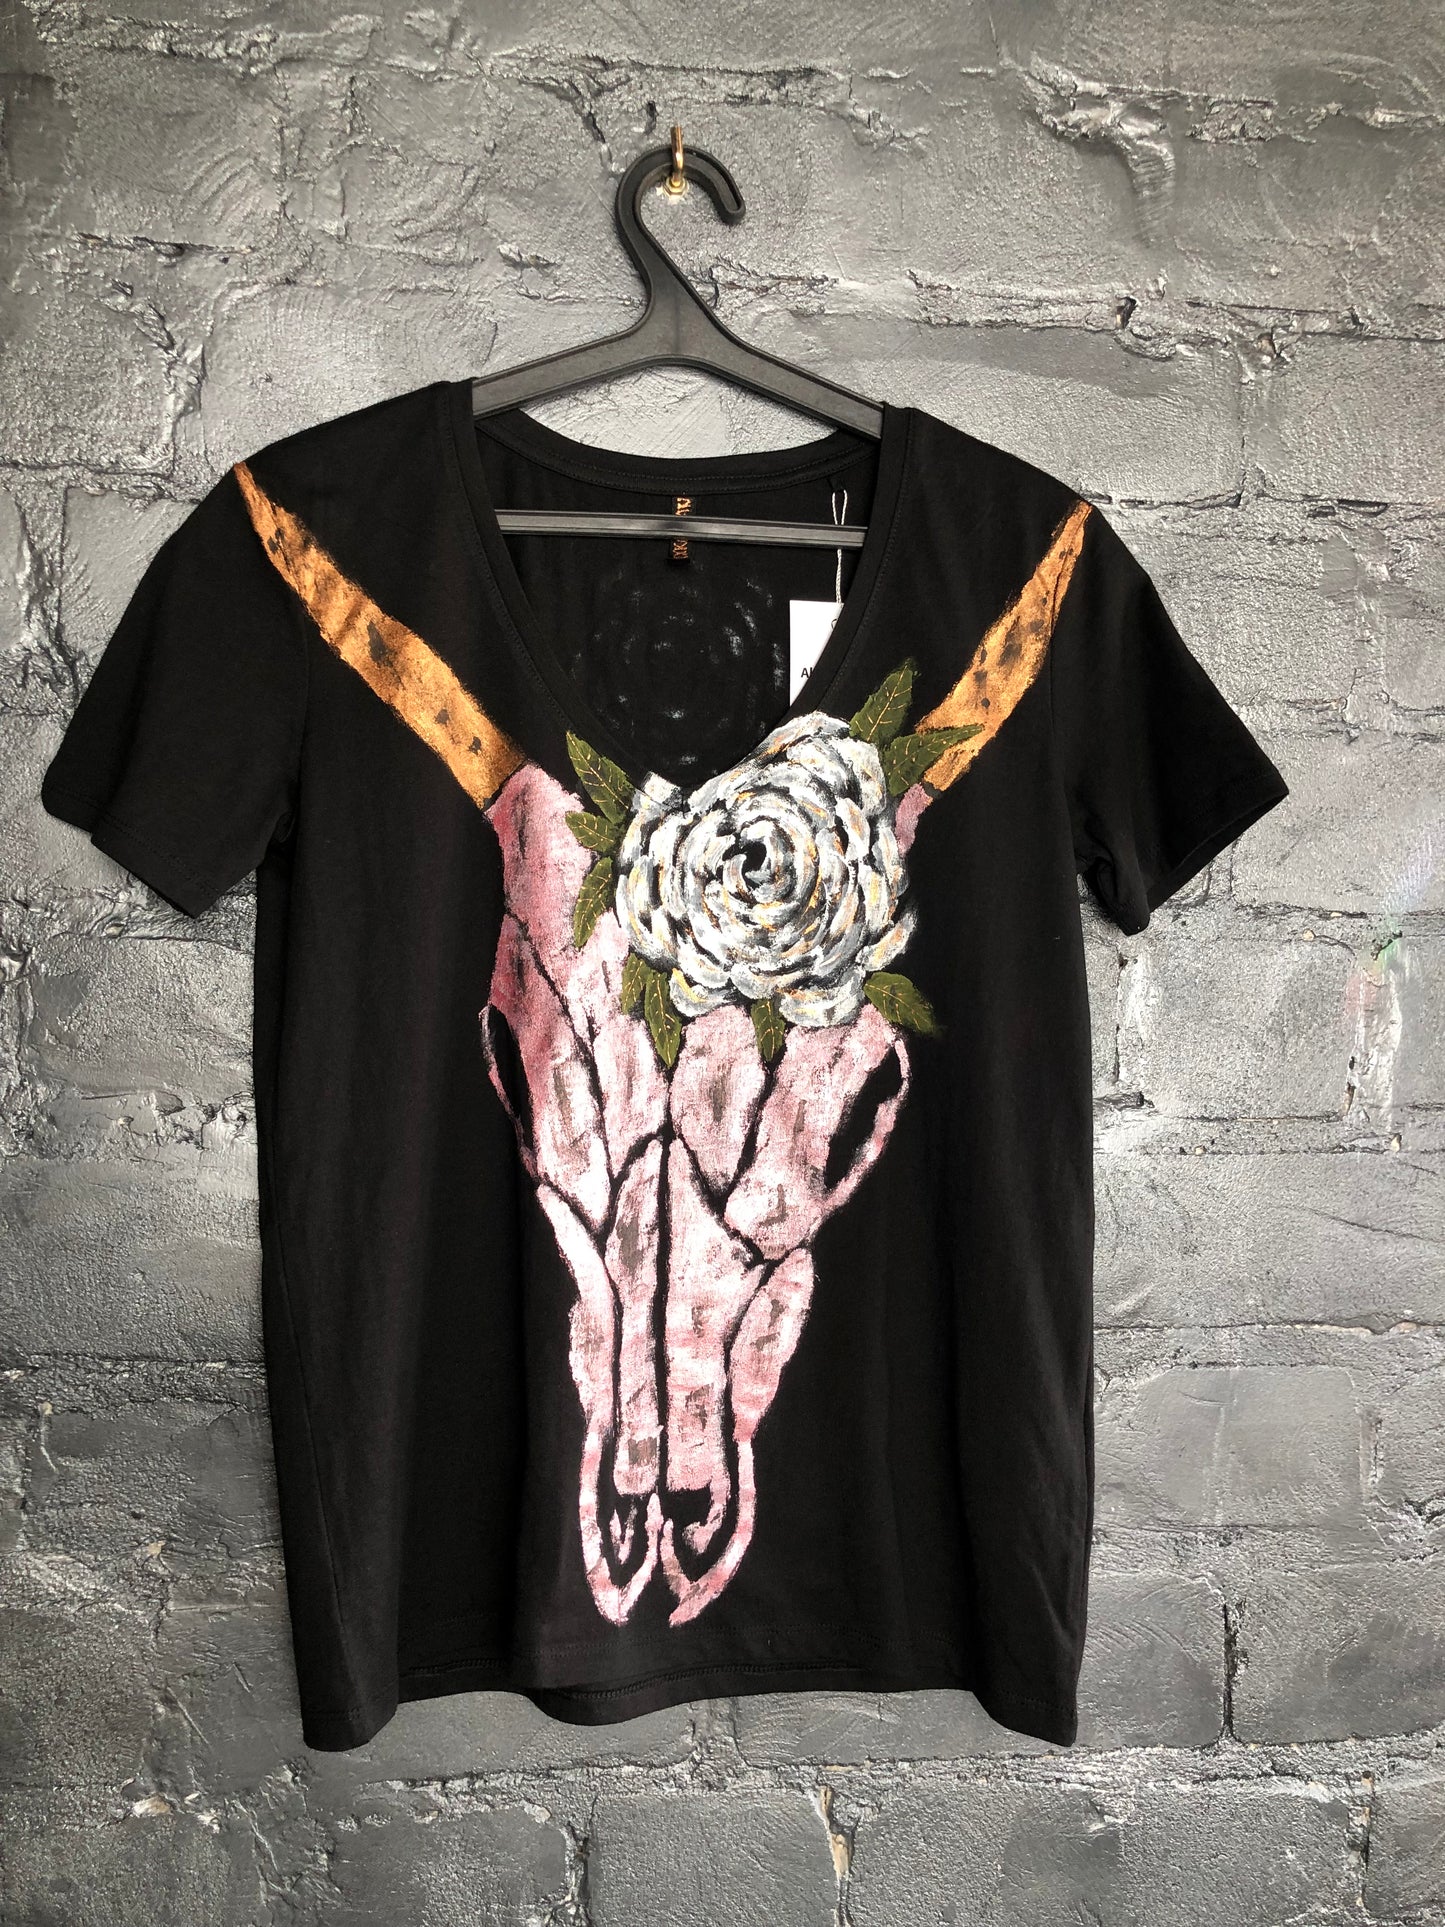 Women's short sleeve t-shirt pink gazelle skull